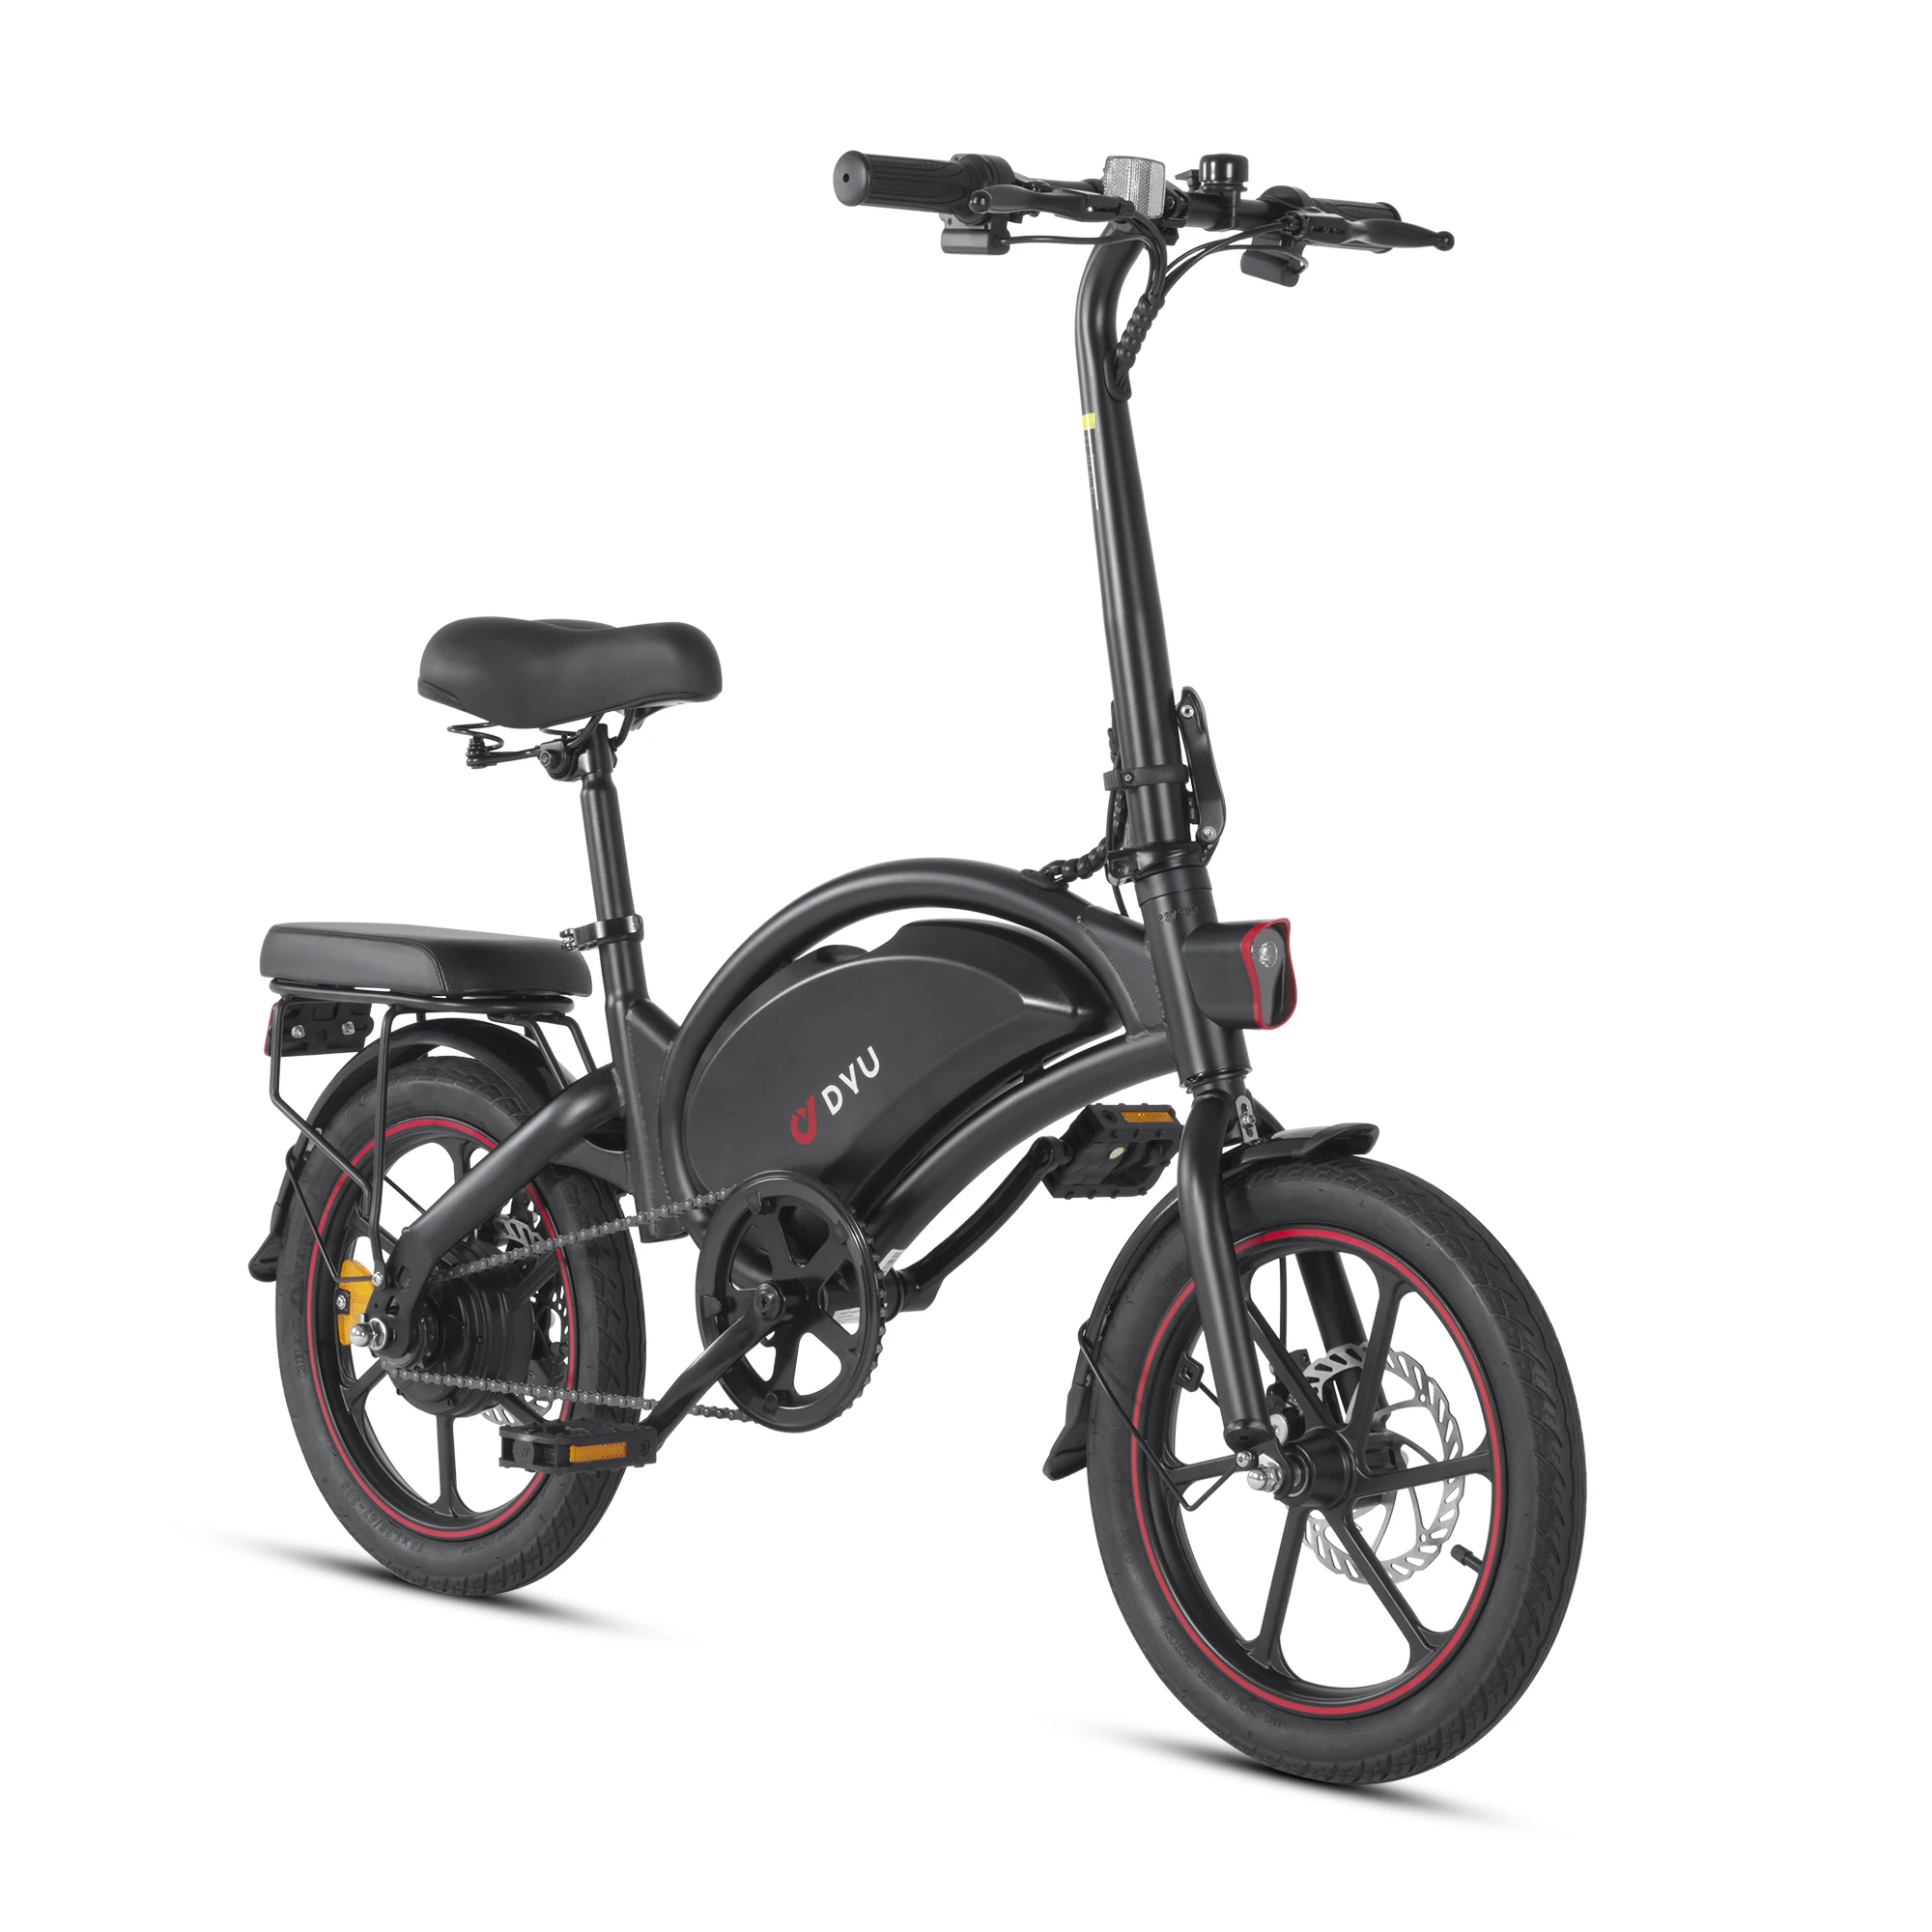 

EU UK USA Warehouse dyu d16 E-bike manufacturer adult ebike electric dirt bike turtle electric bicycle